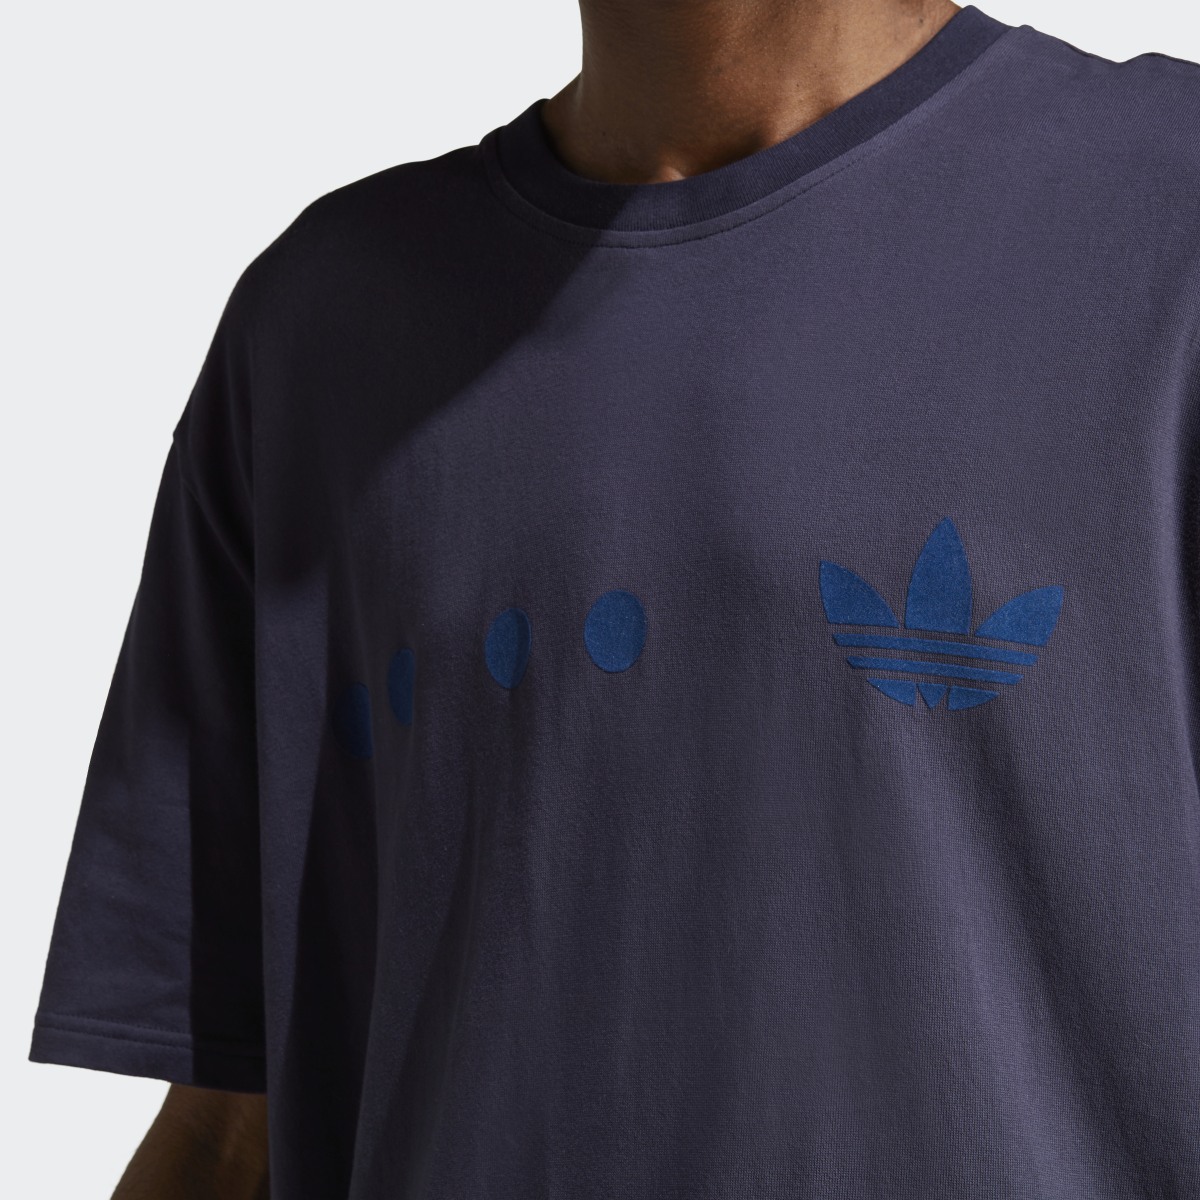 Adidas RIFTA City Boy Graphic T-Shirt. 7